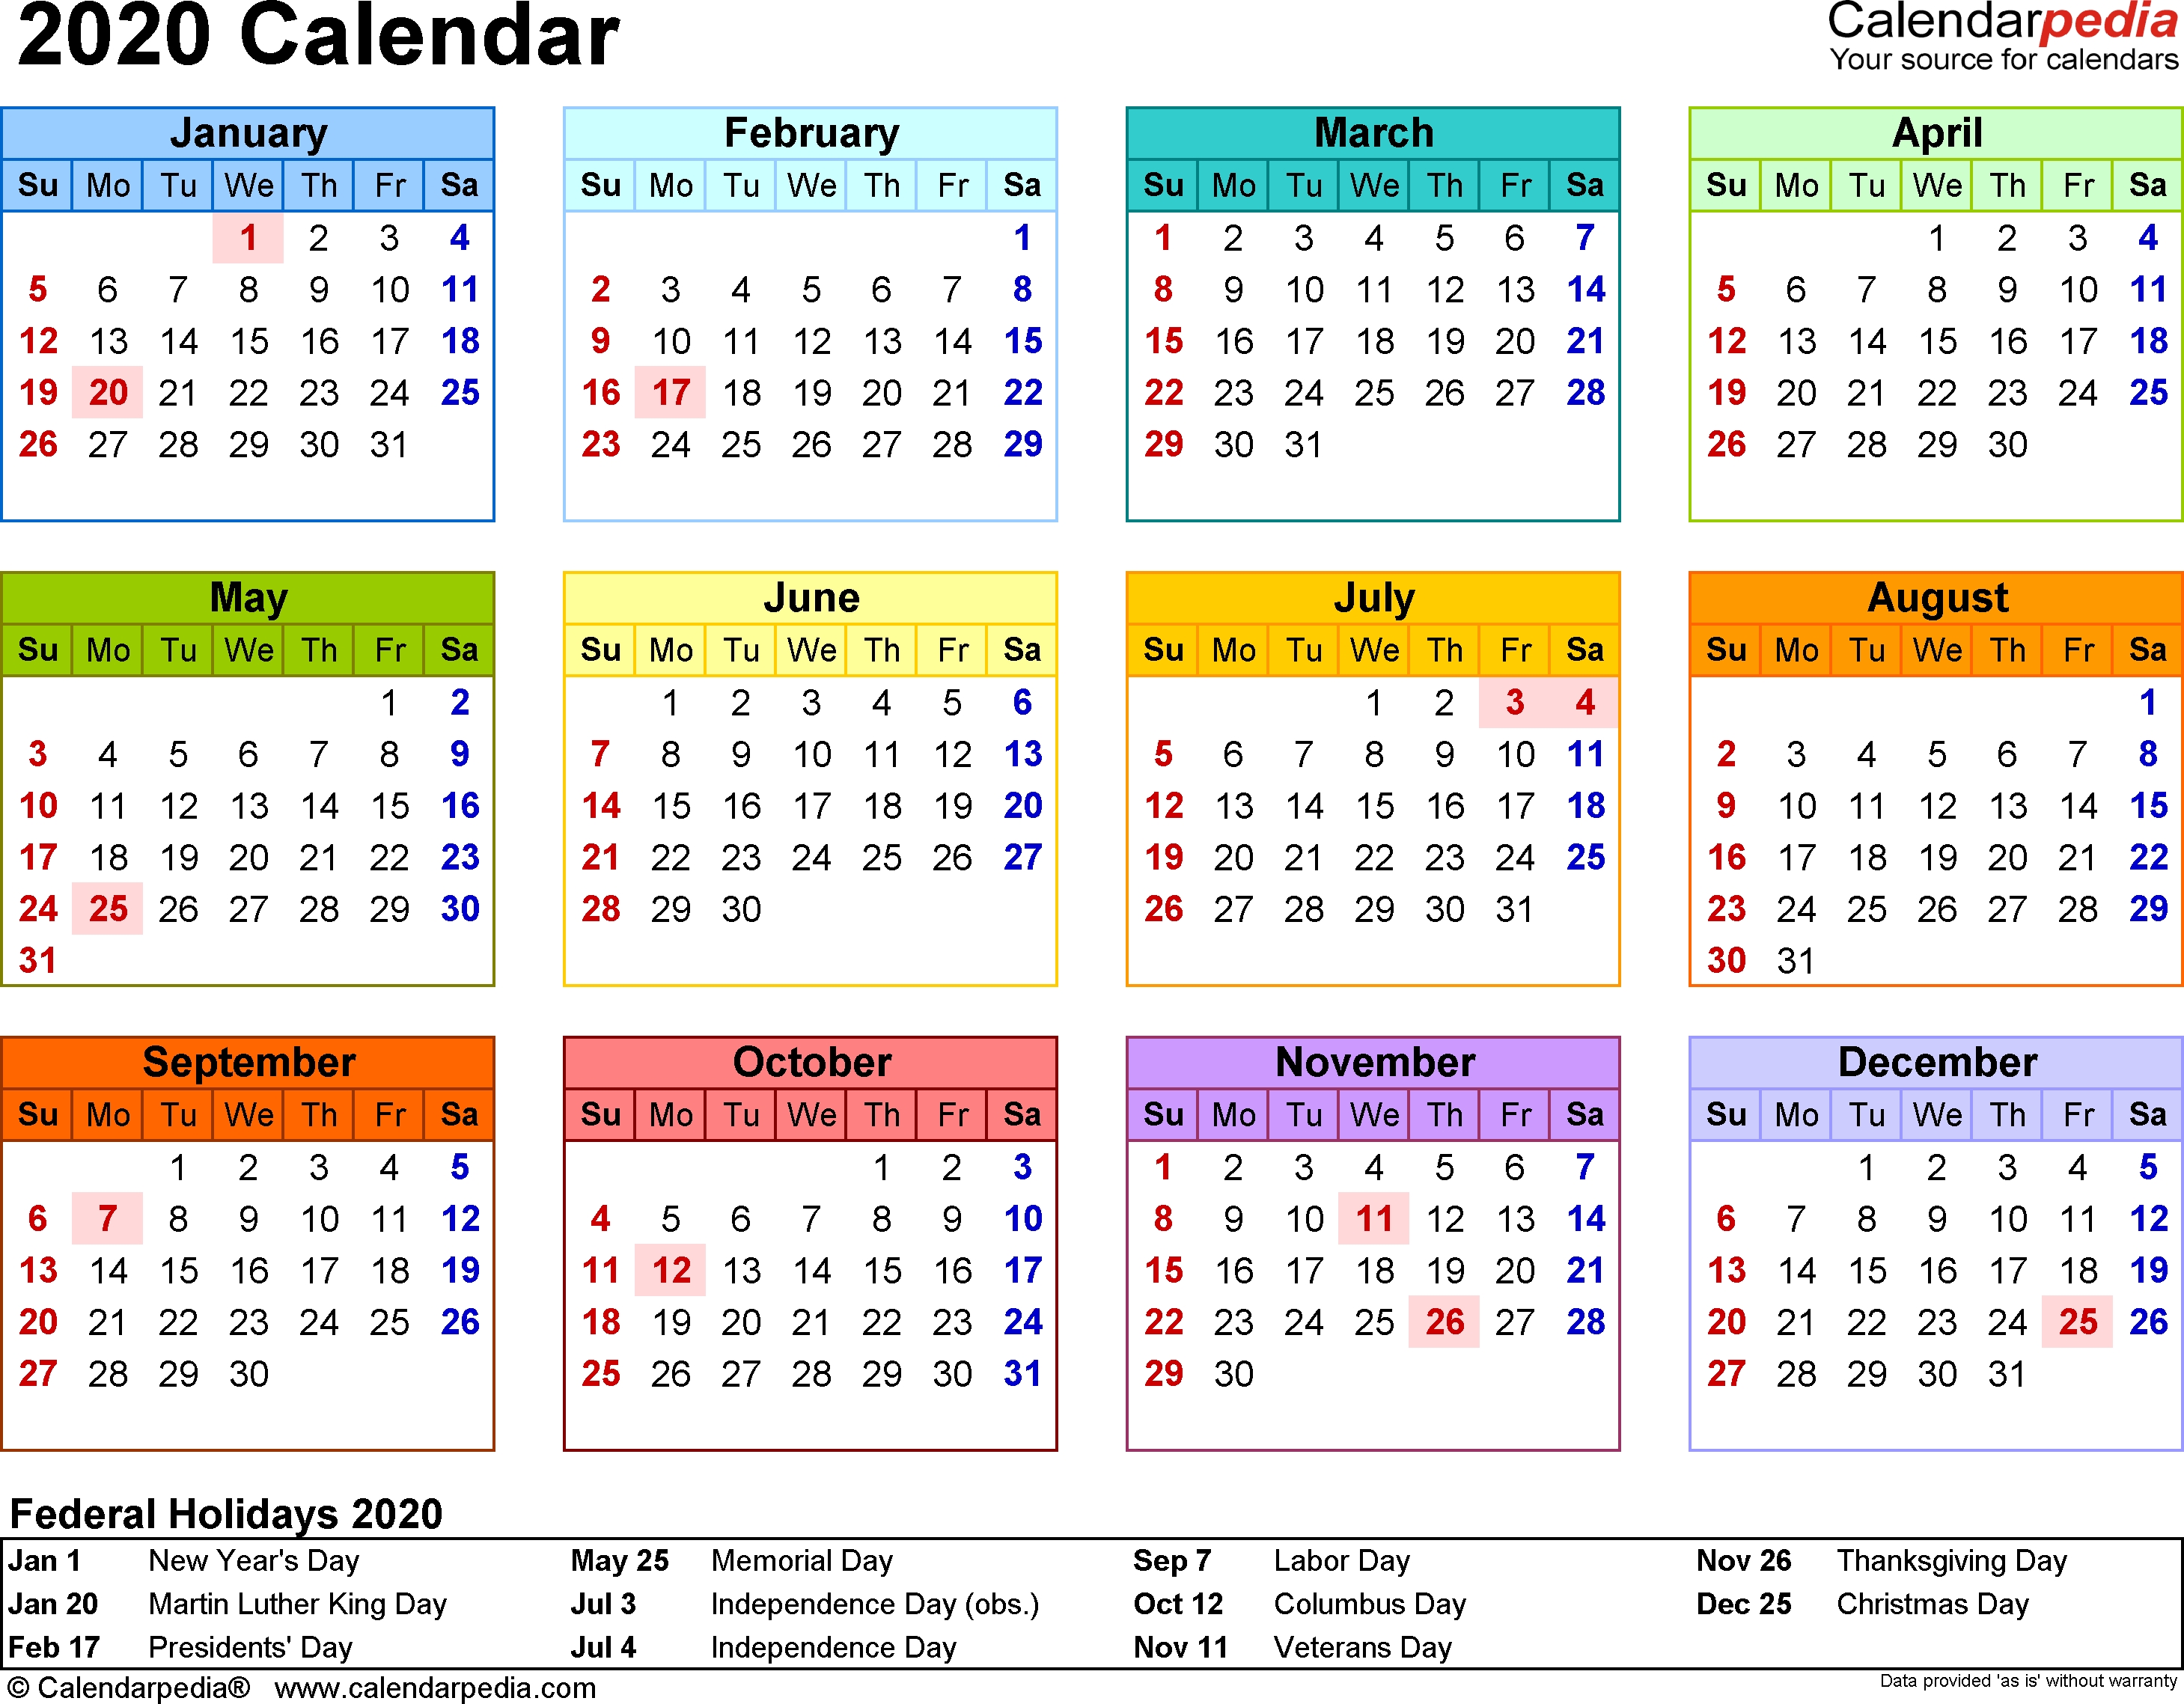 2020 Calendar Pdf - 18 Free Printable Calendar Templates-Adobe Indesign Calendar Template 2020